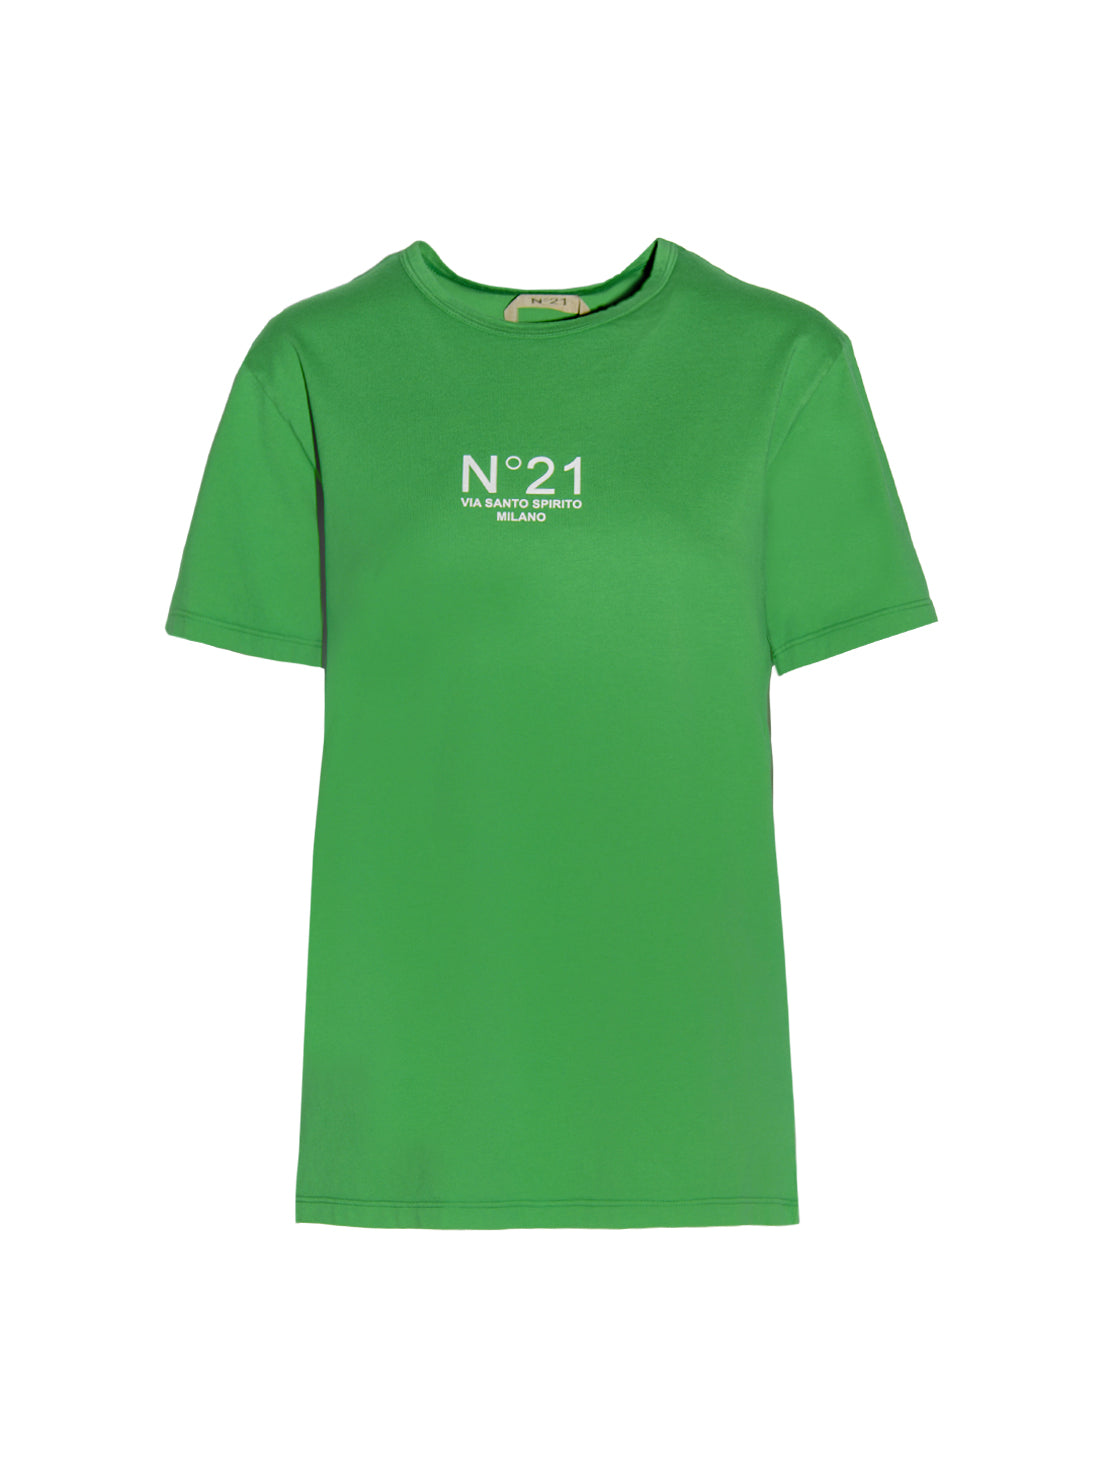 N°21 T-Shirt grün mit Logo